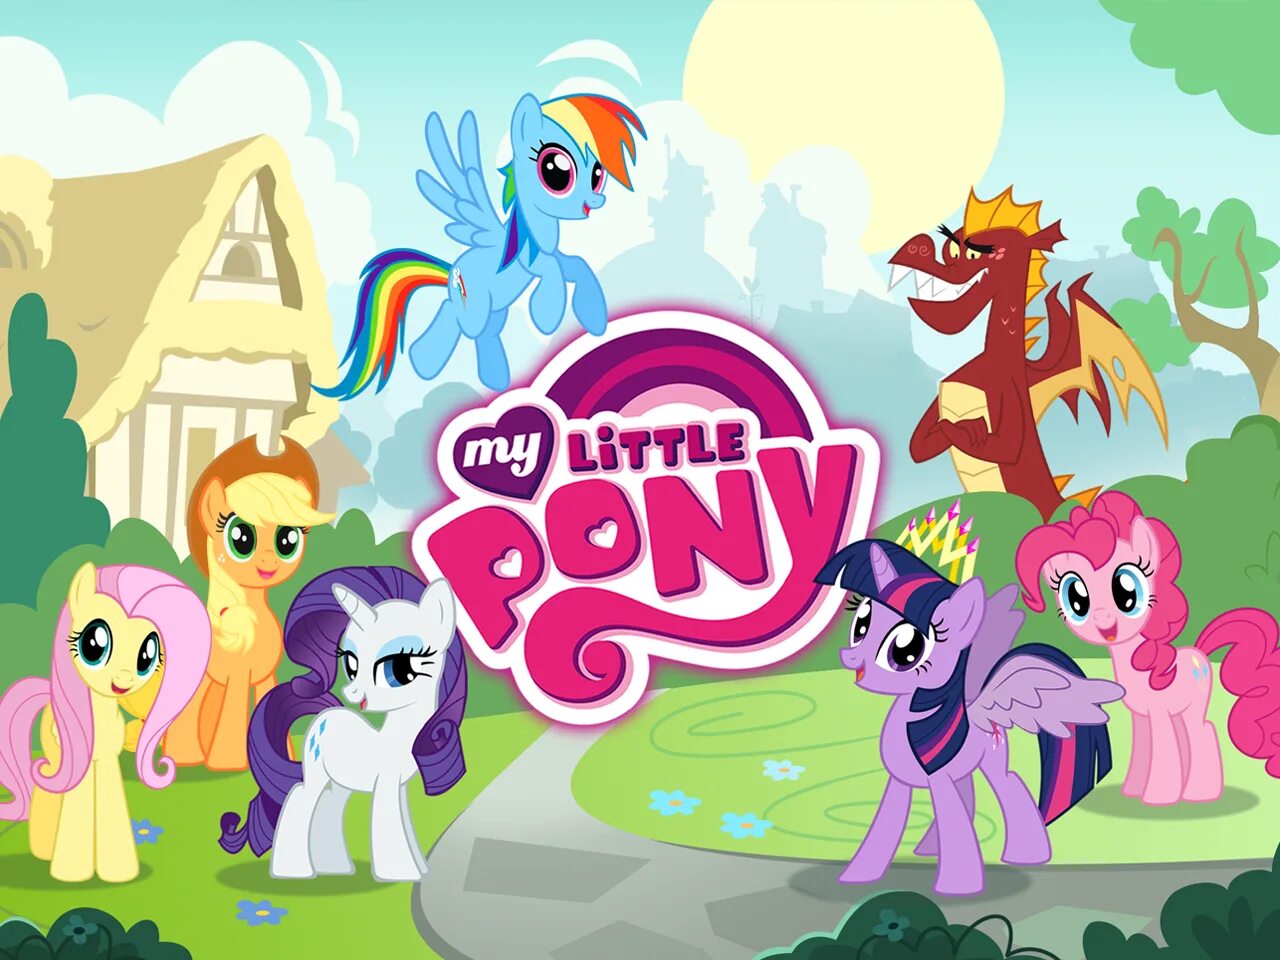 Бесплатная игра my little pony. Игры по my little Pony. Игра my little Pony Gameloft. My little Pony Friendship is Magic игра. My little Pony от Gameloft.